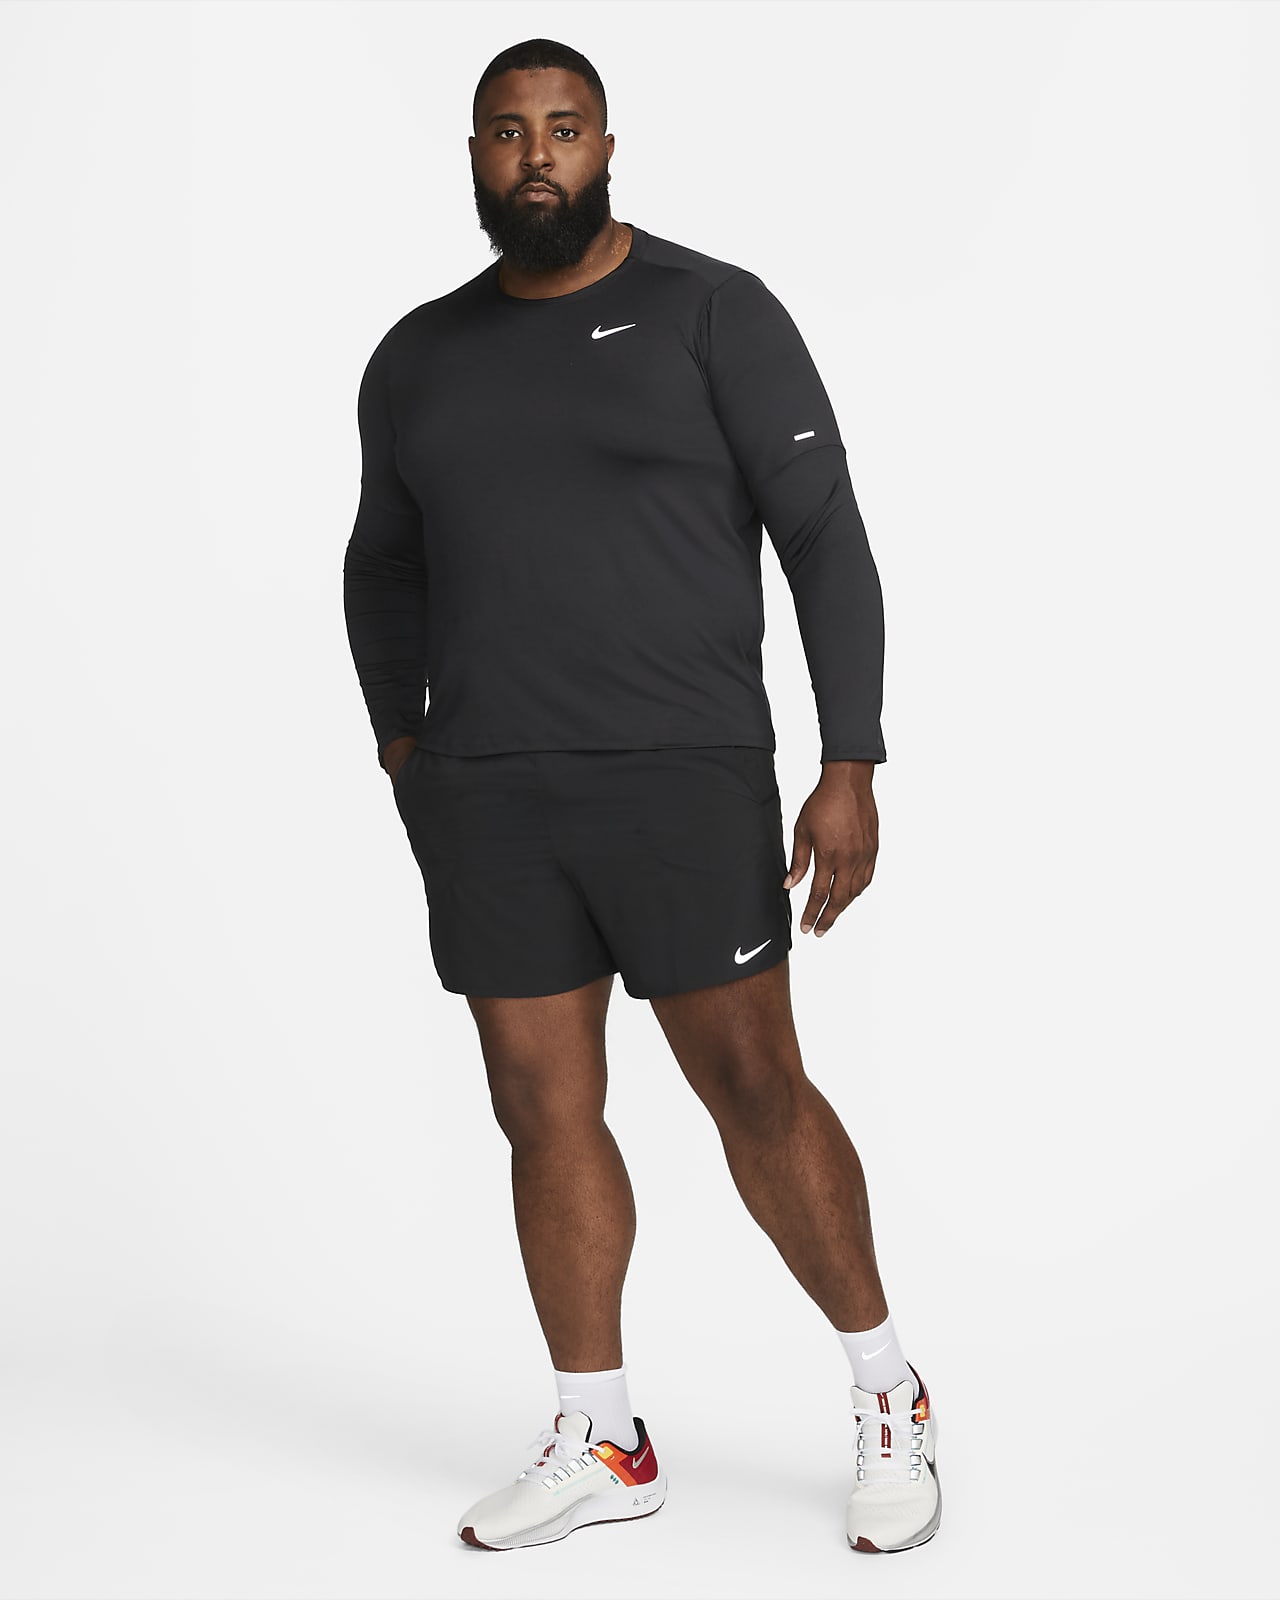 Nike Men's Dri-FIT Running Crew Top.